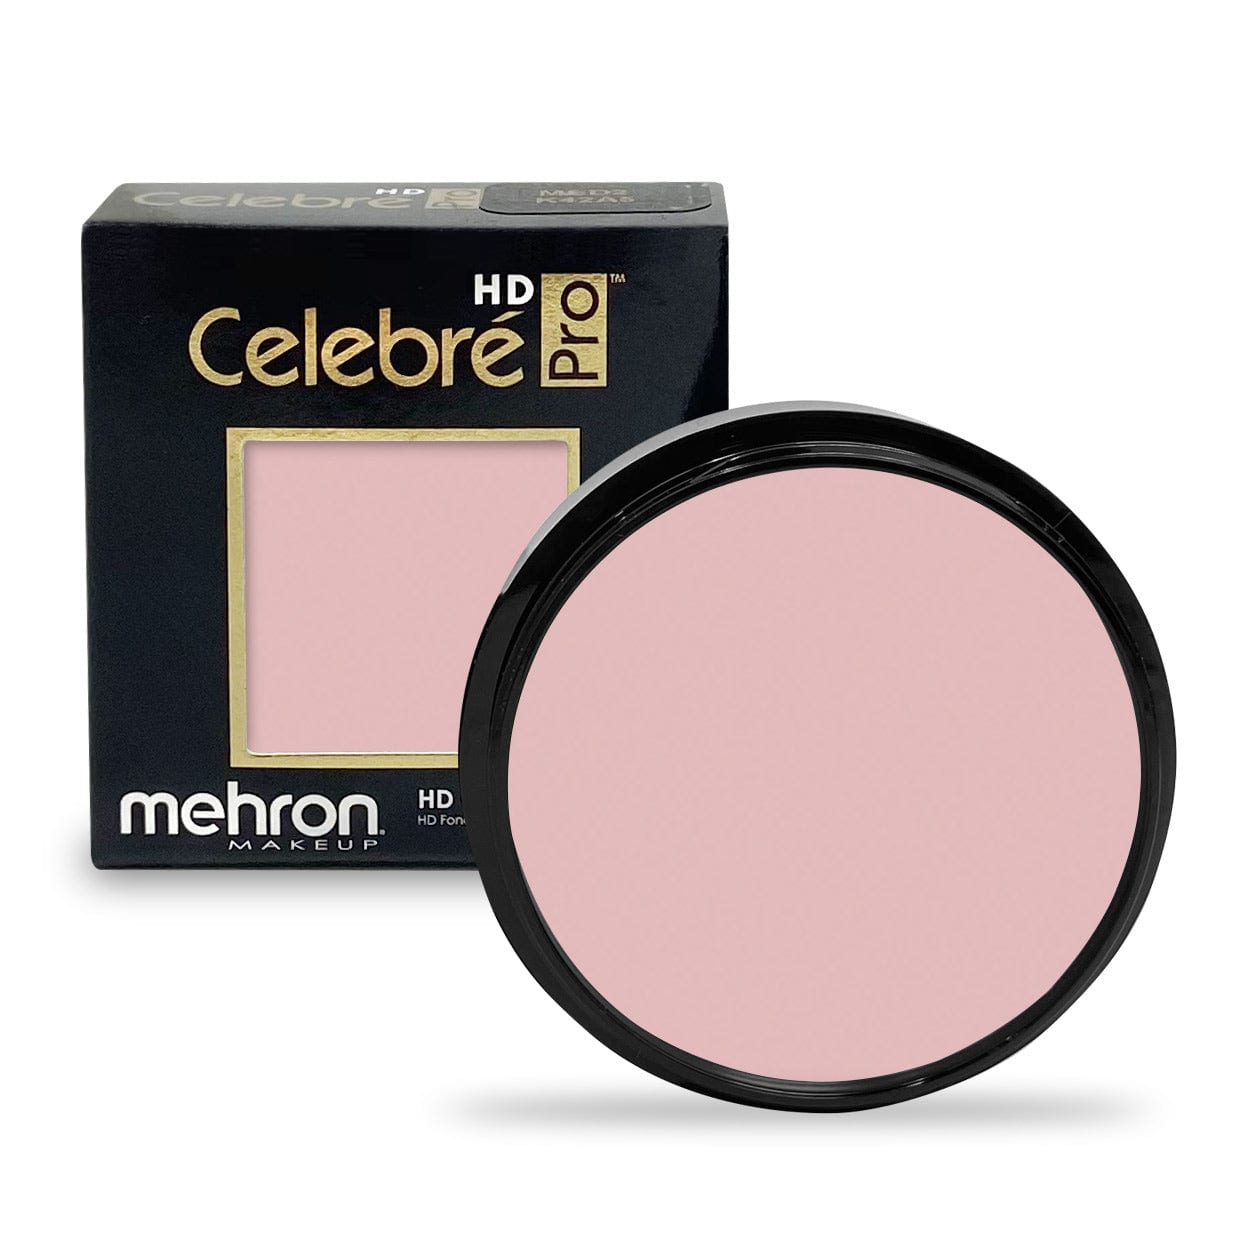 Mehron Celebre Pro HD-Cream 25g - 2B Extra Fair - Mehron